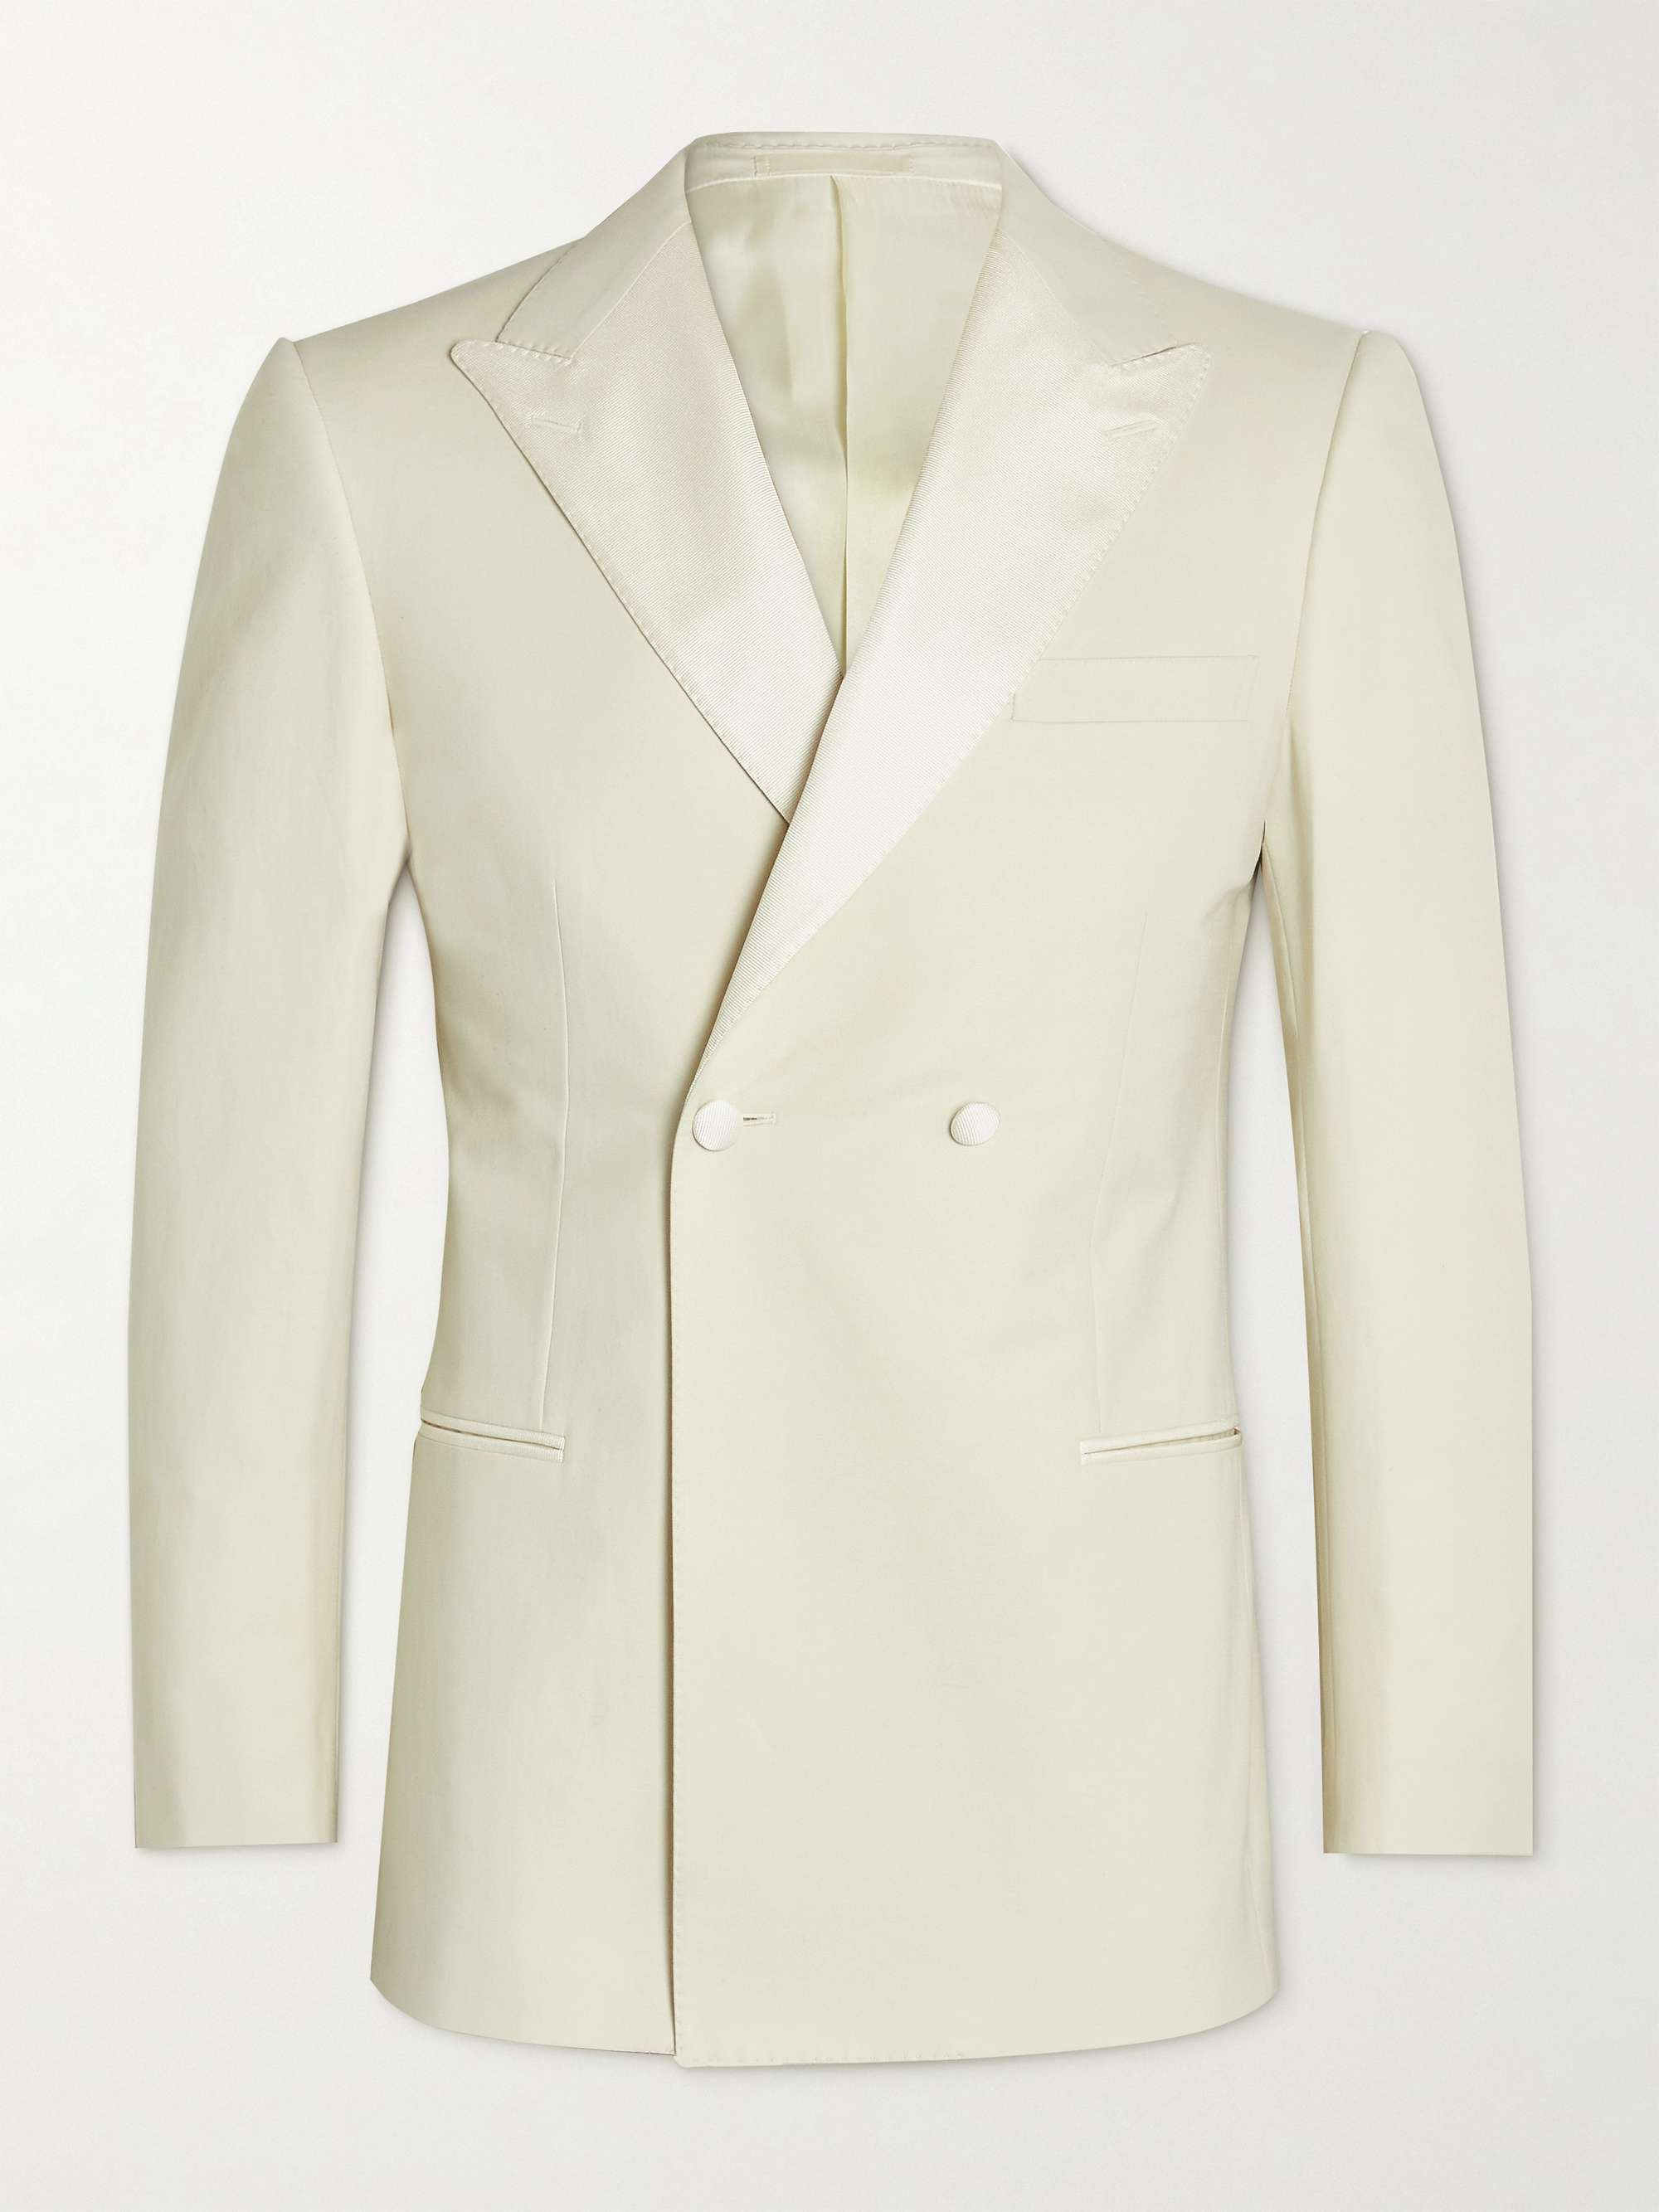 KINGSMAN Double-Breasted Cotton-Blend Twill Tuxedo Jacket